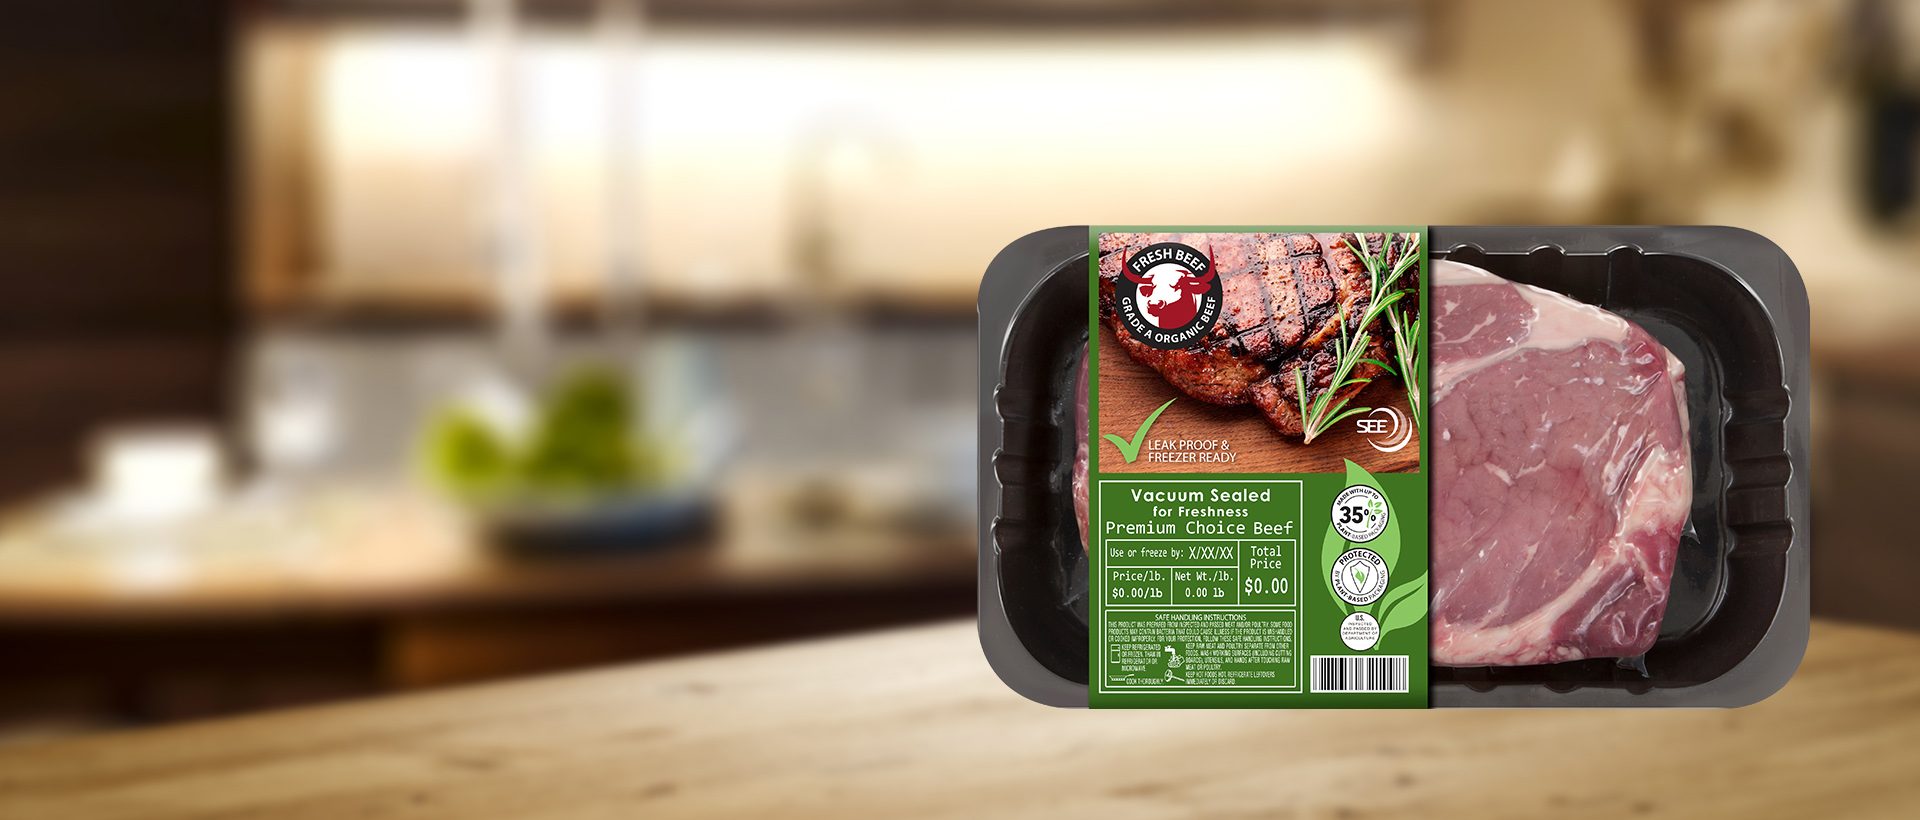 carne en sistema de envasado centralizado tipo “case ready”